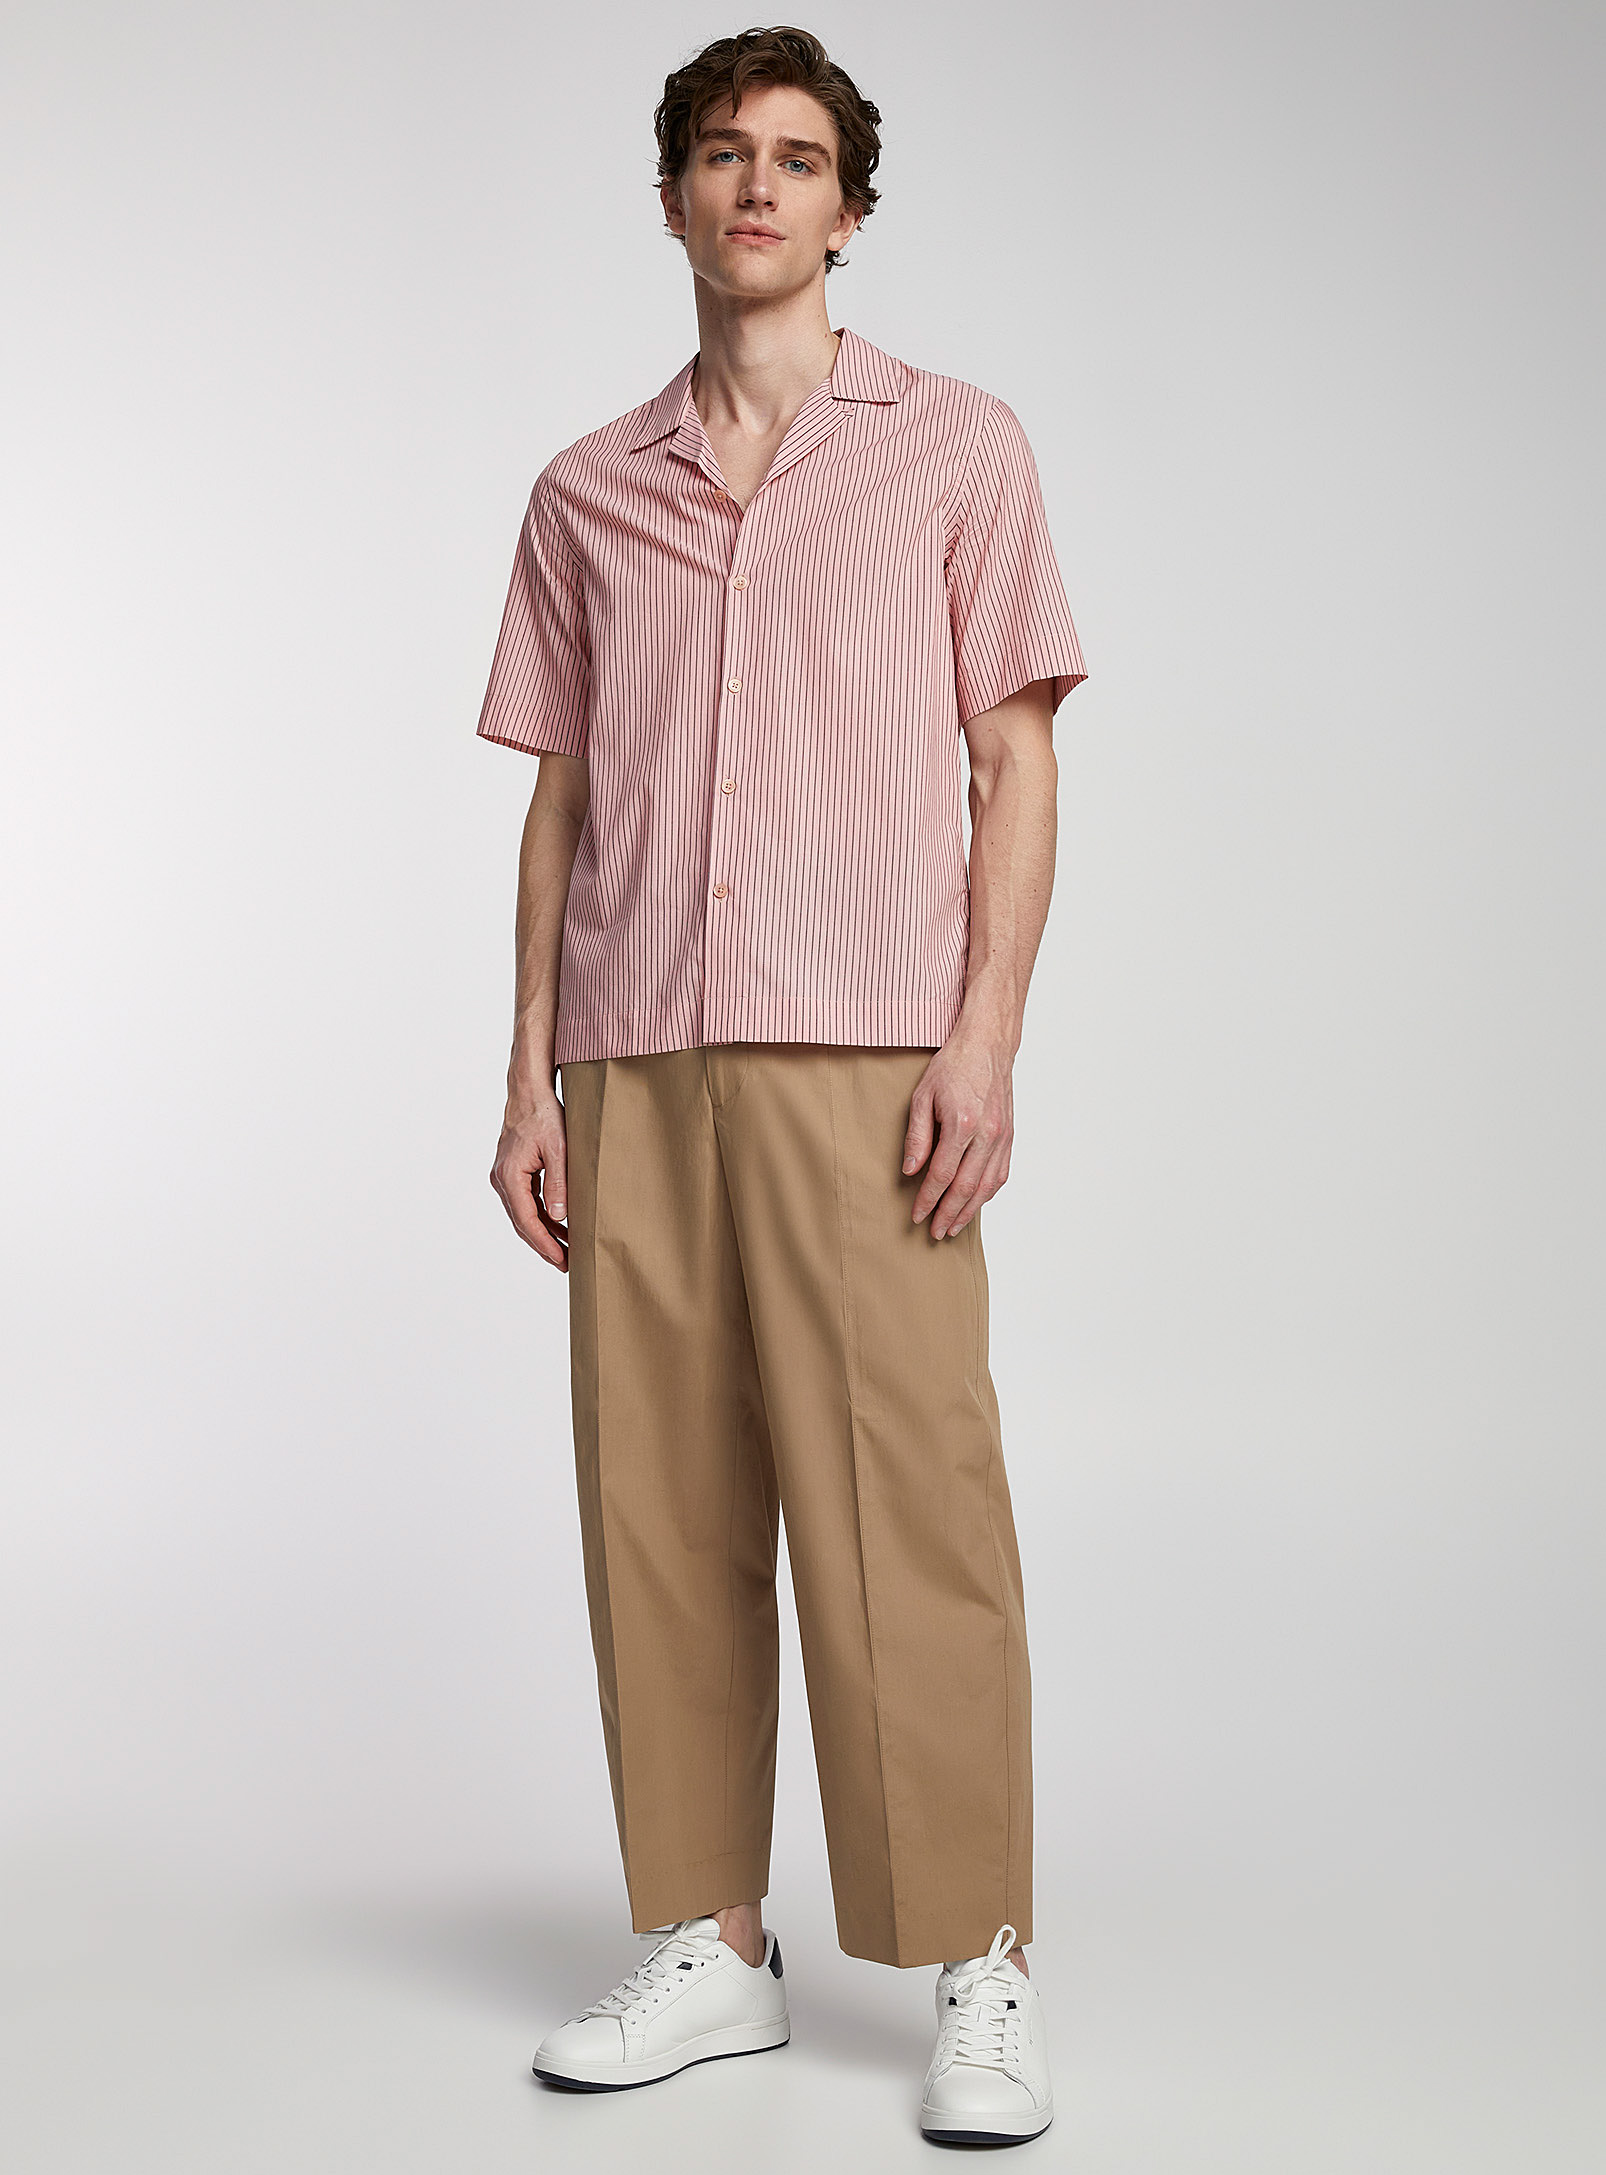 Paul Smith - Men's Organic cotton sand-coloured chino pant